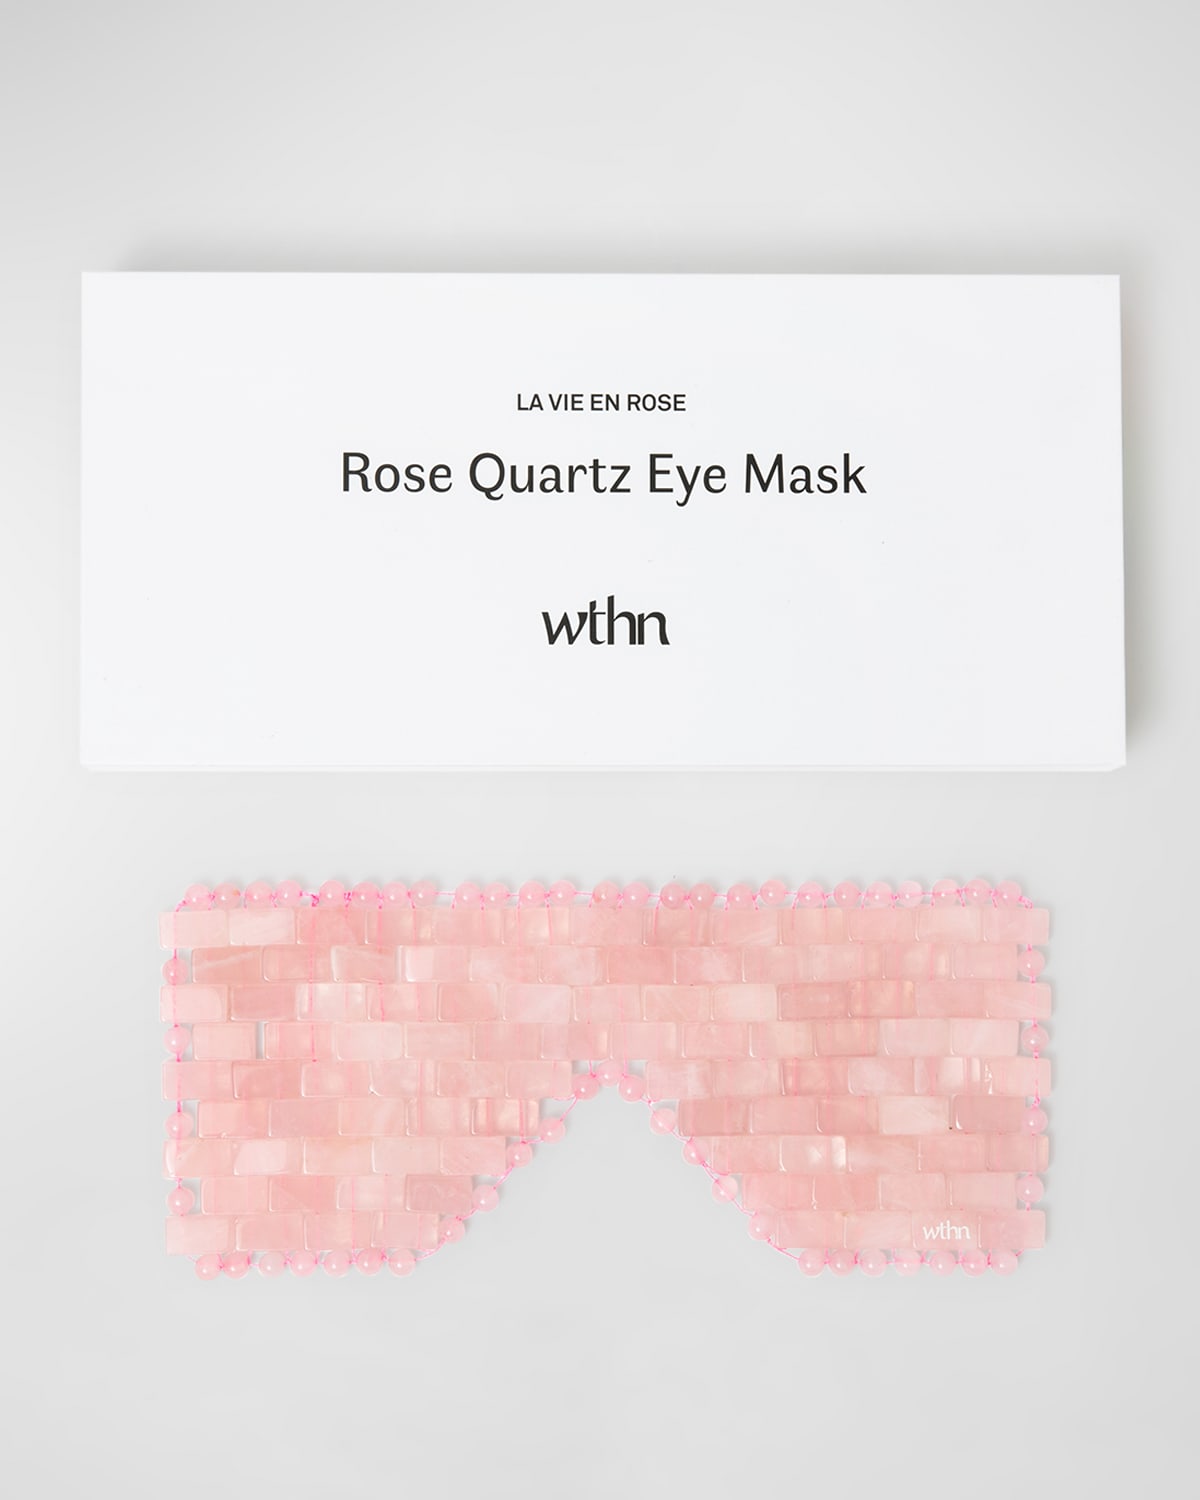 Rose Quartz Eye Mask